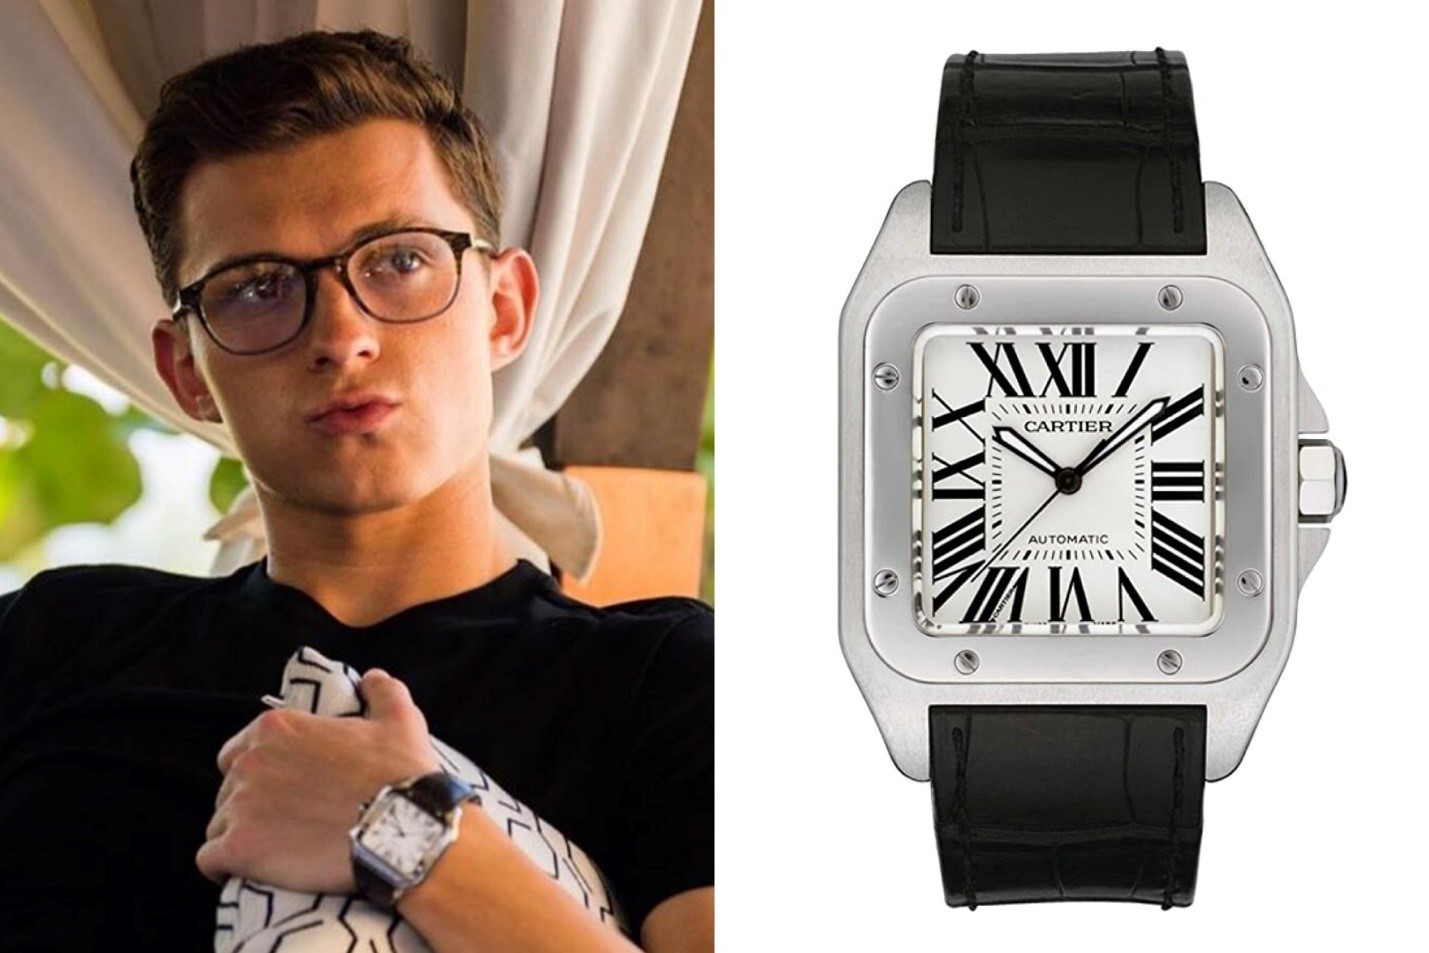 Đồng hồ Cartier Santos có giá khoảng 5000 đô la